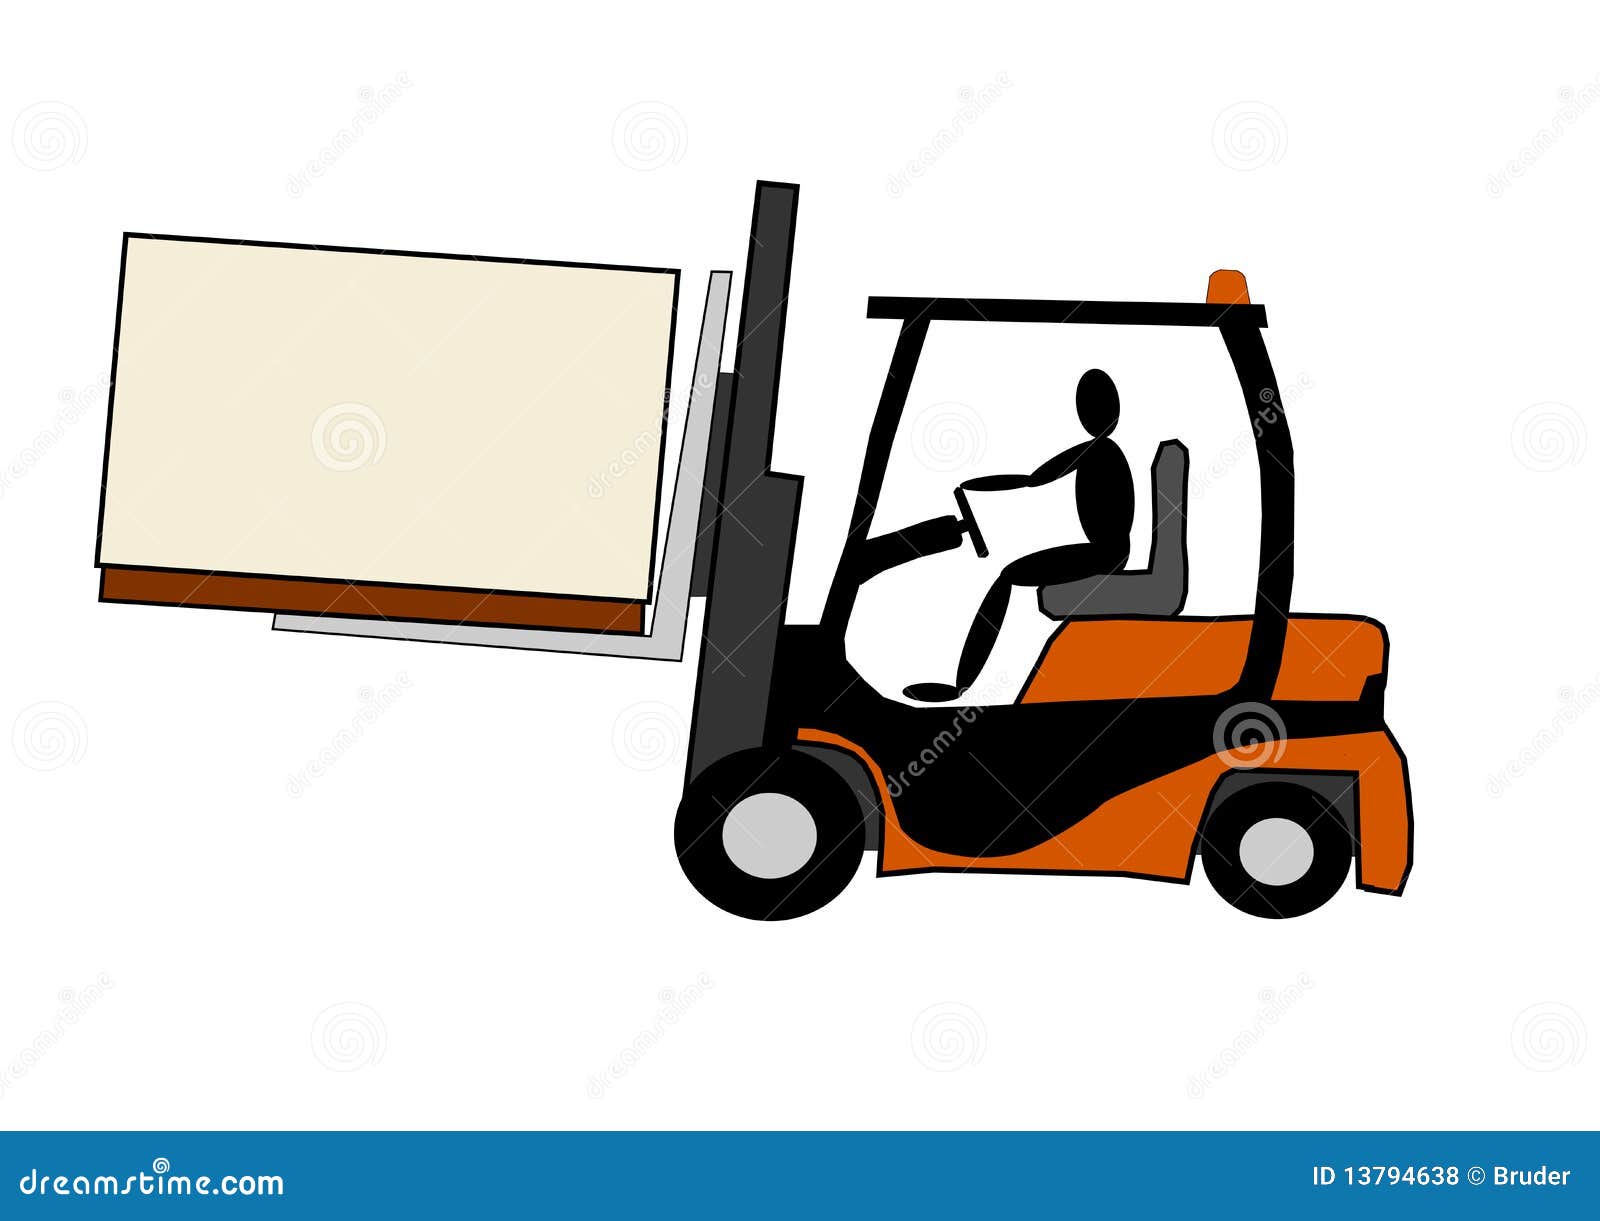 Forklift stock vector. Illustration of industrial, loading - 13794638